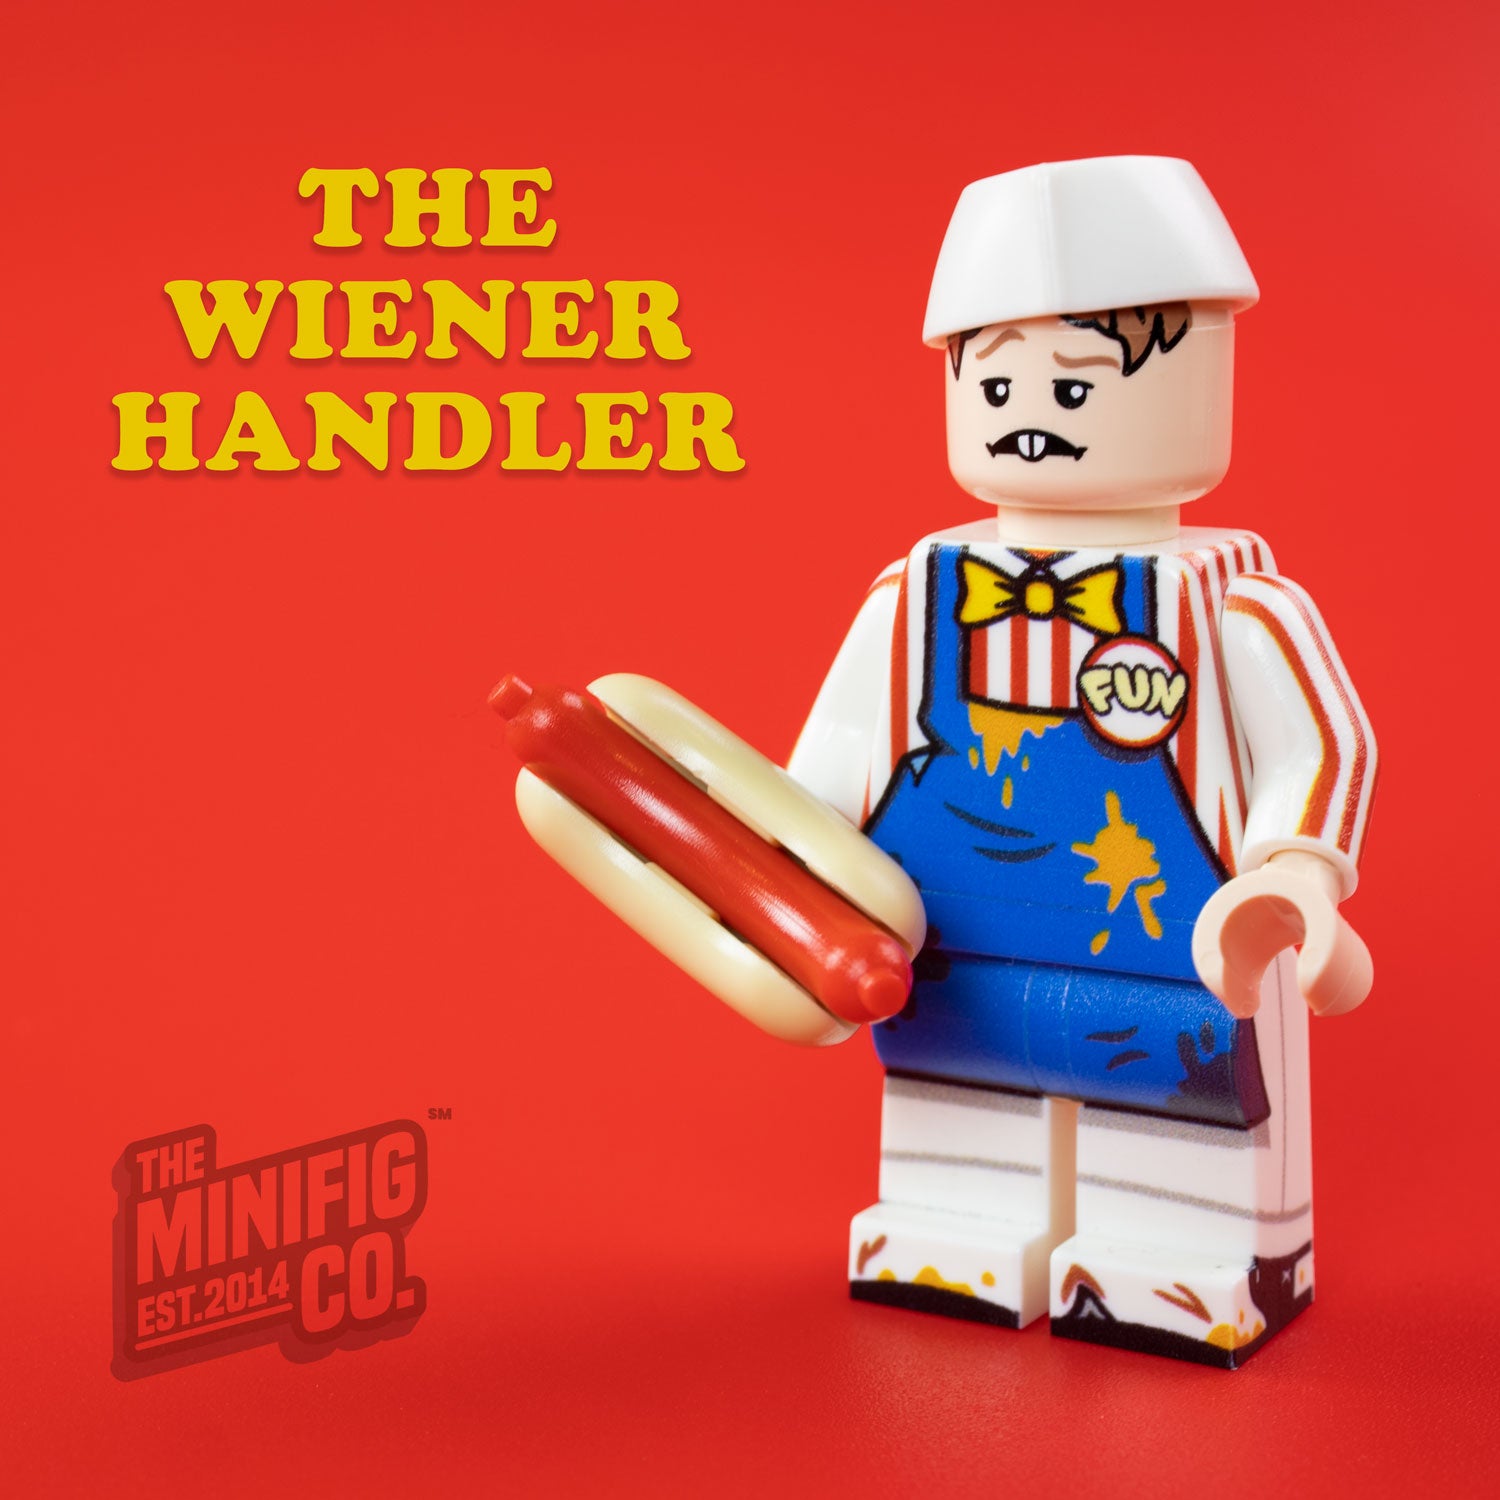 Custom Printed Lego - The Wiener Handler - The Minifig Co.